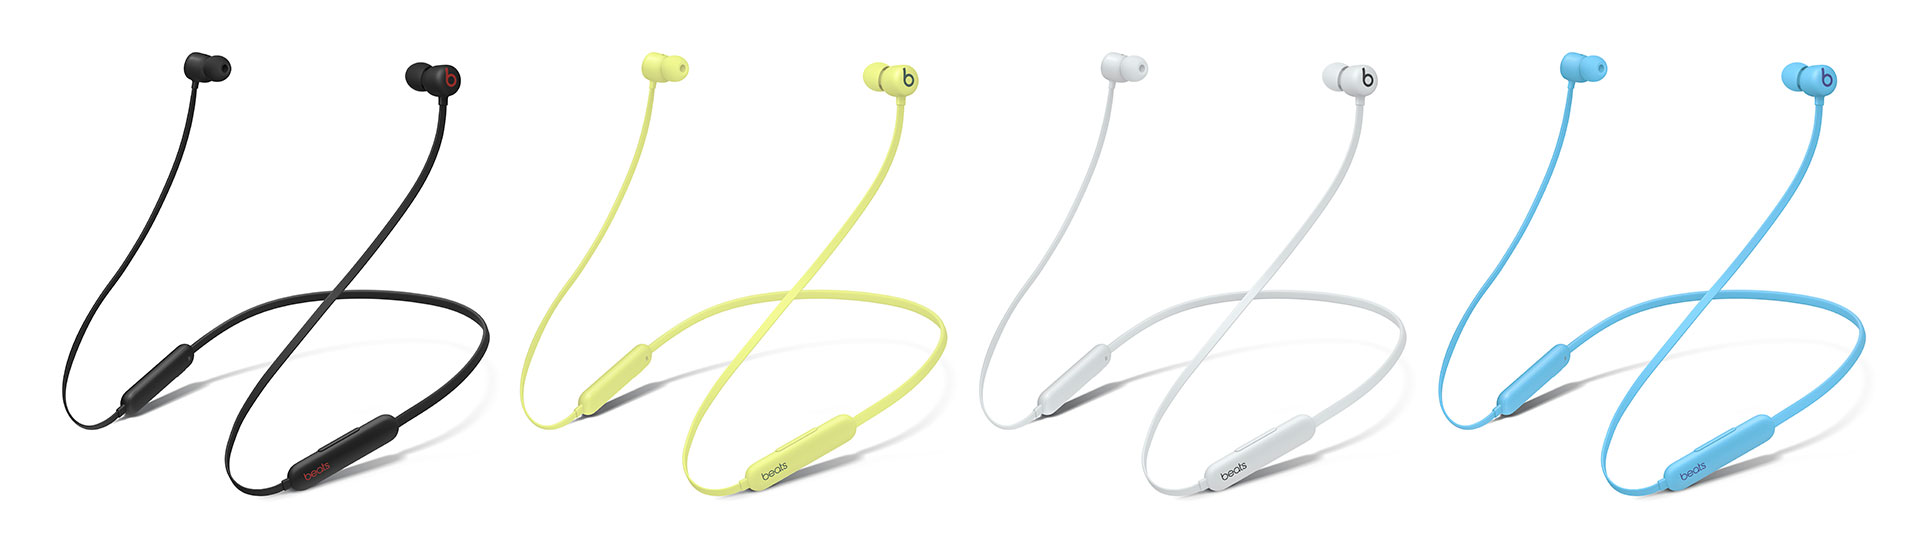 apple beats flex wireless earbuds colors